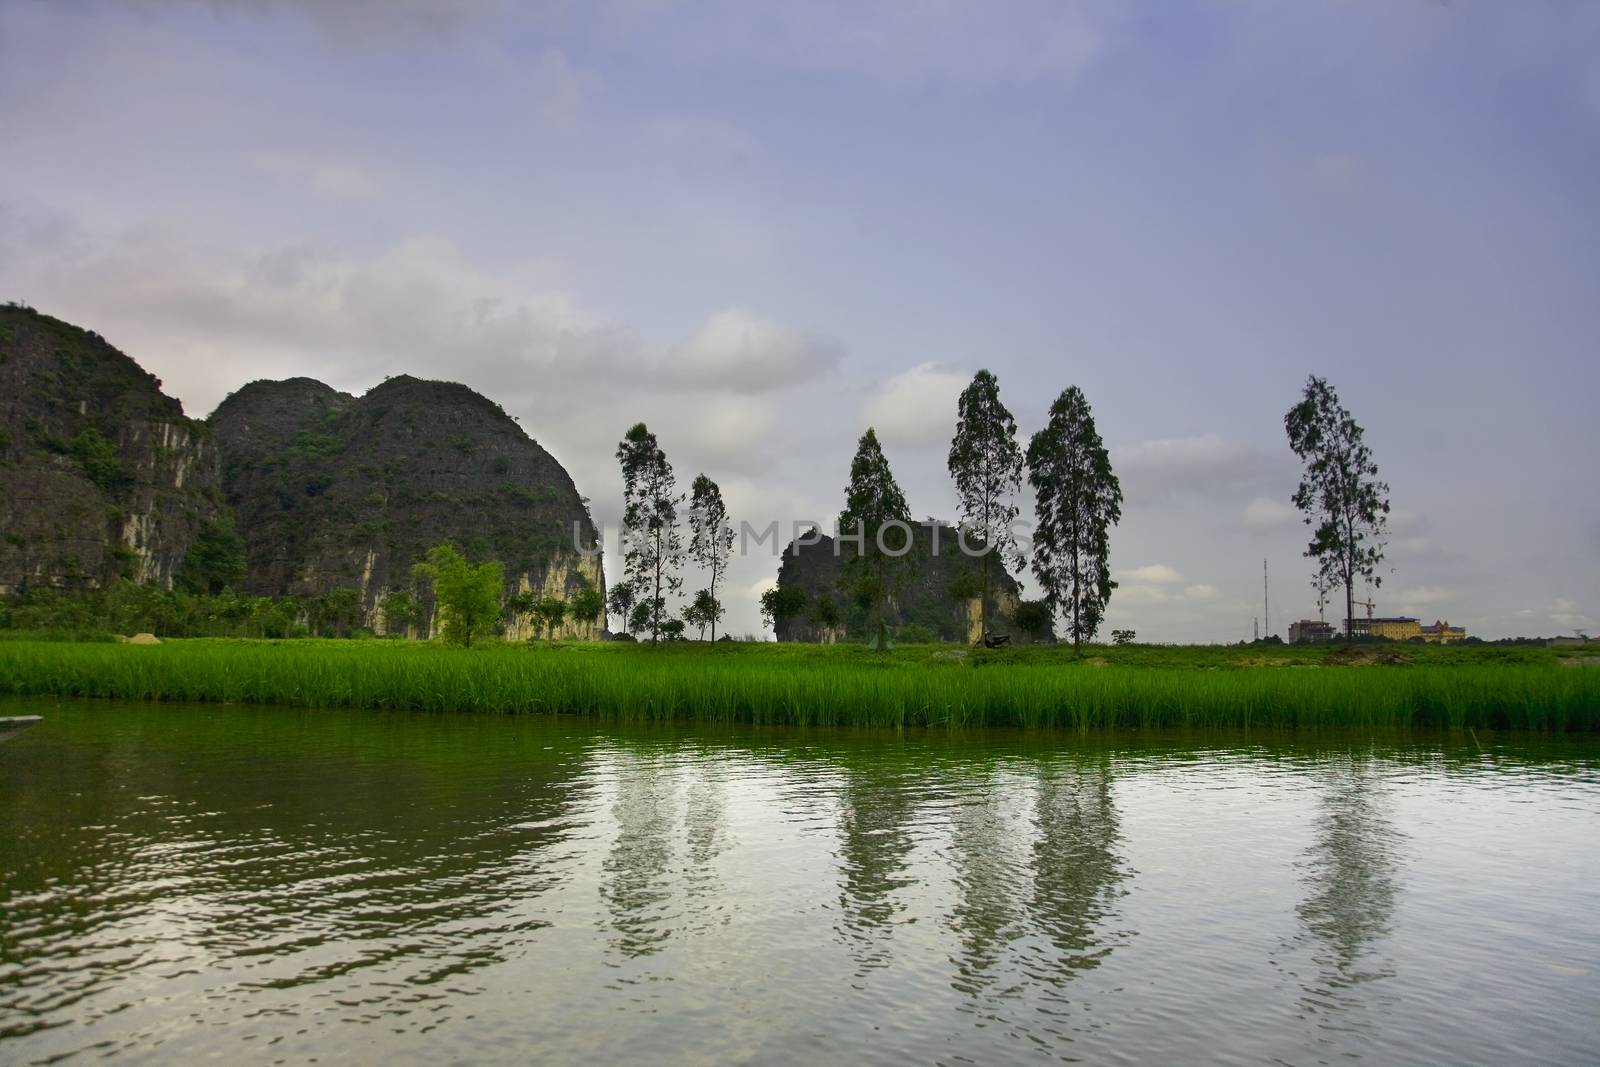 Travelling along rice fields on Tam Coc stream, Ninnh Binh, Vietnam.